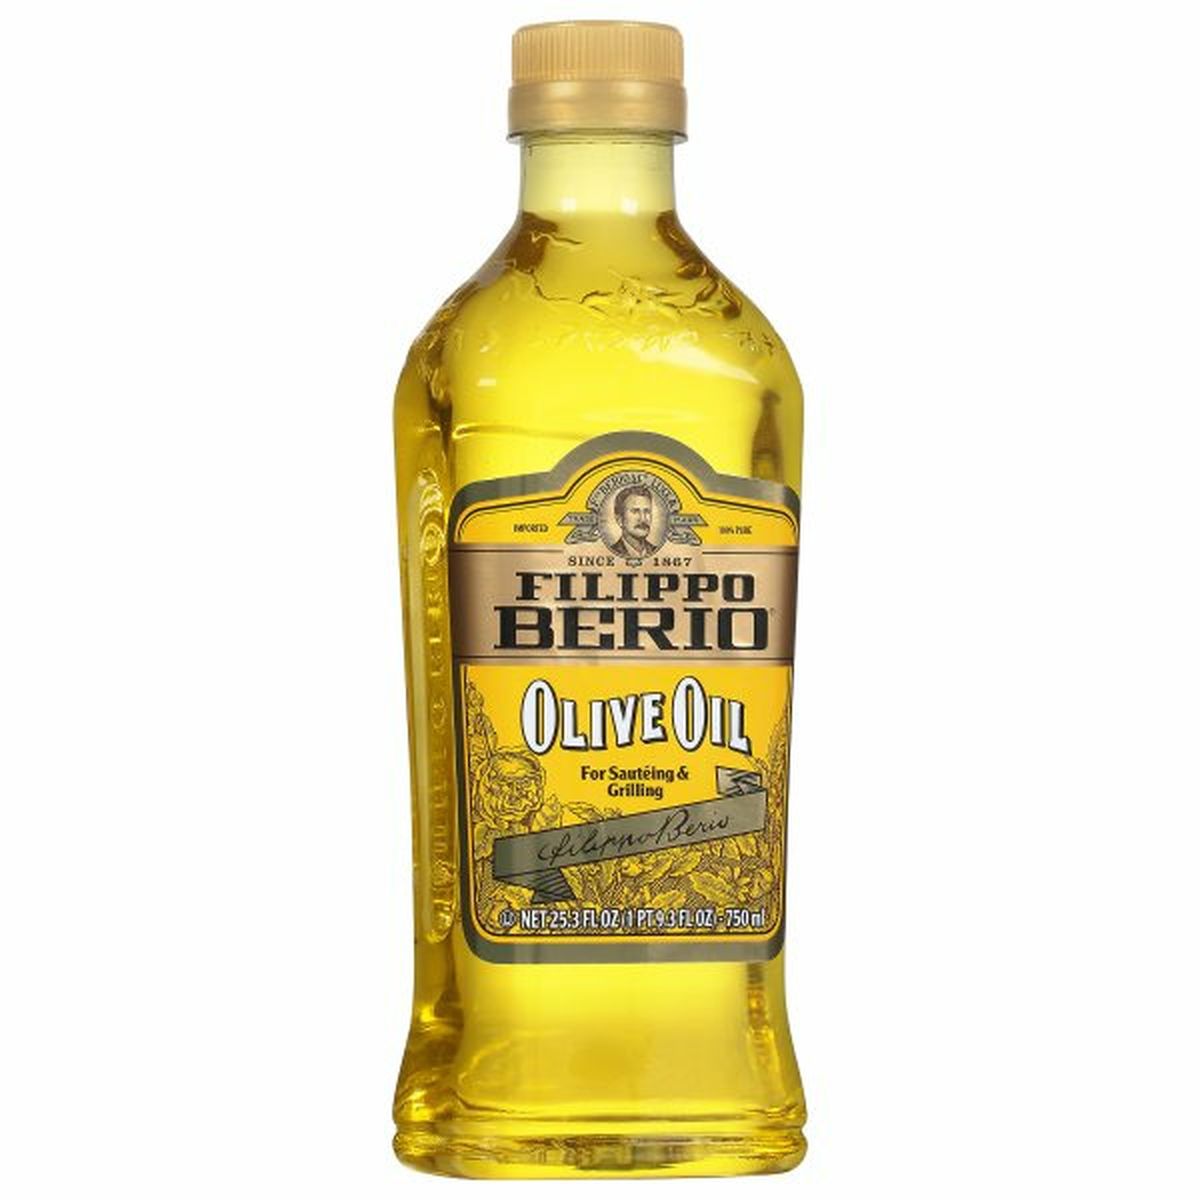 Calories in Filippo Berio Olive Oil